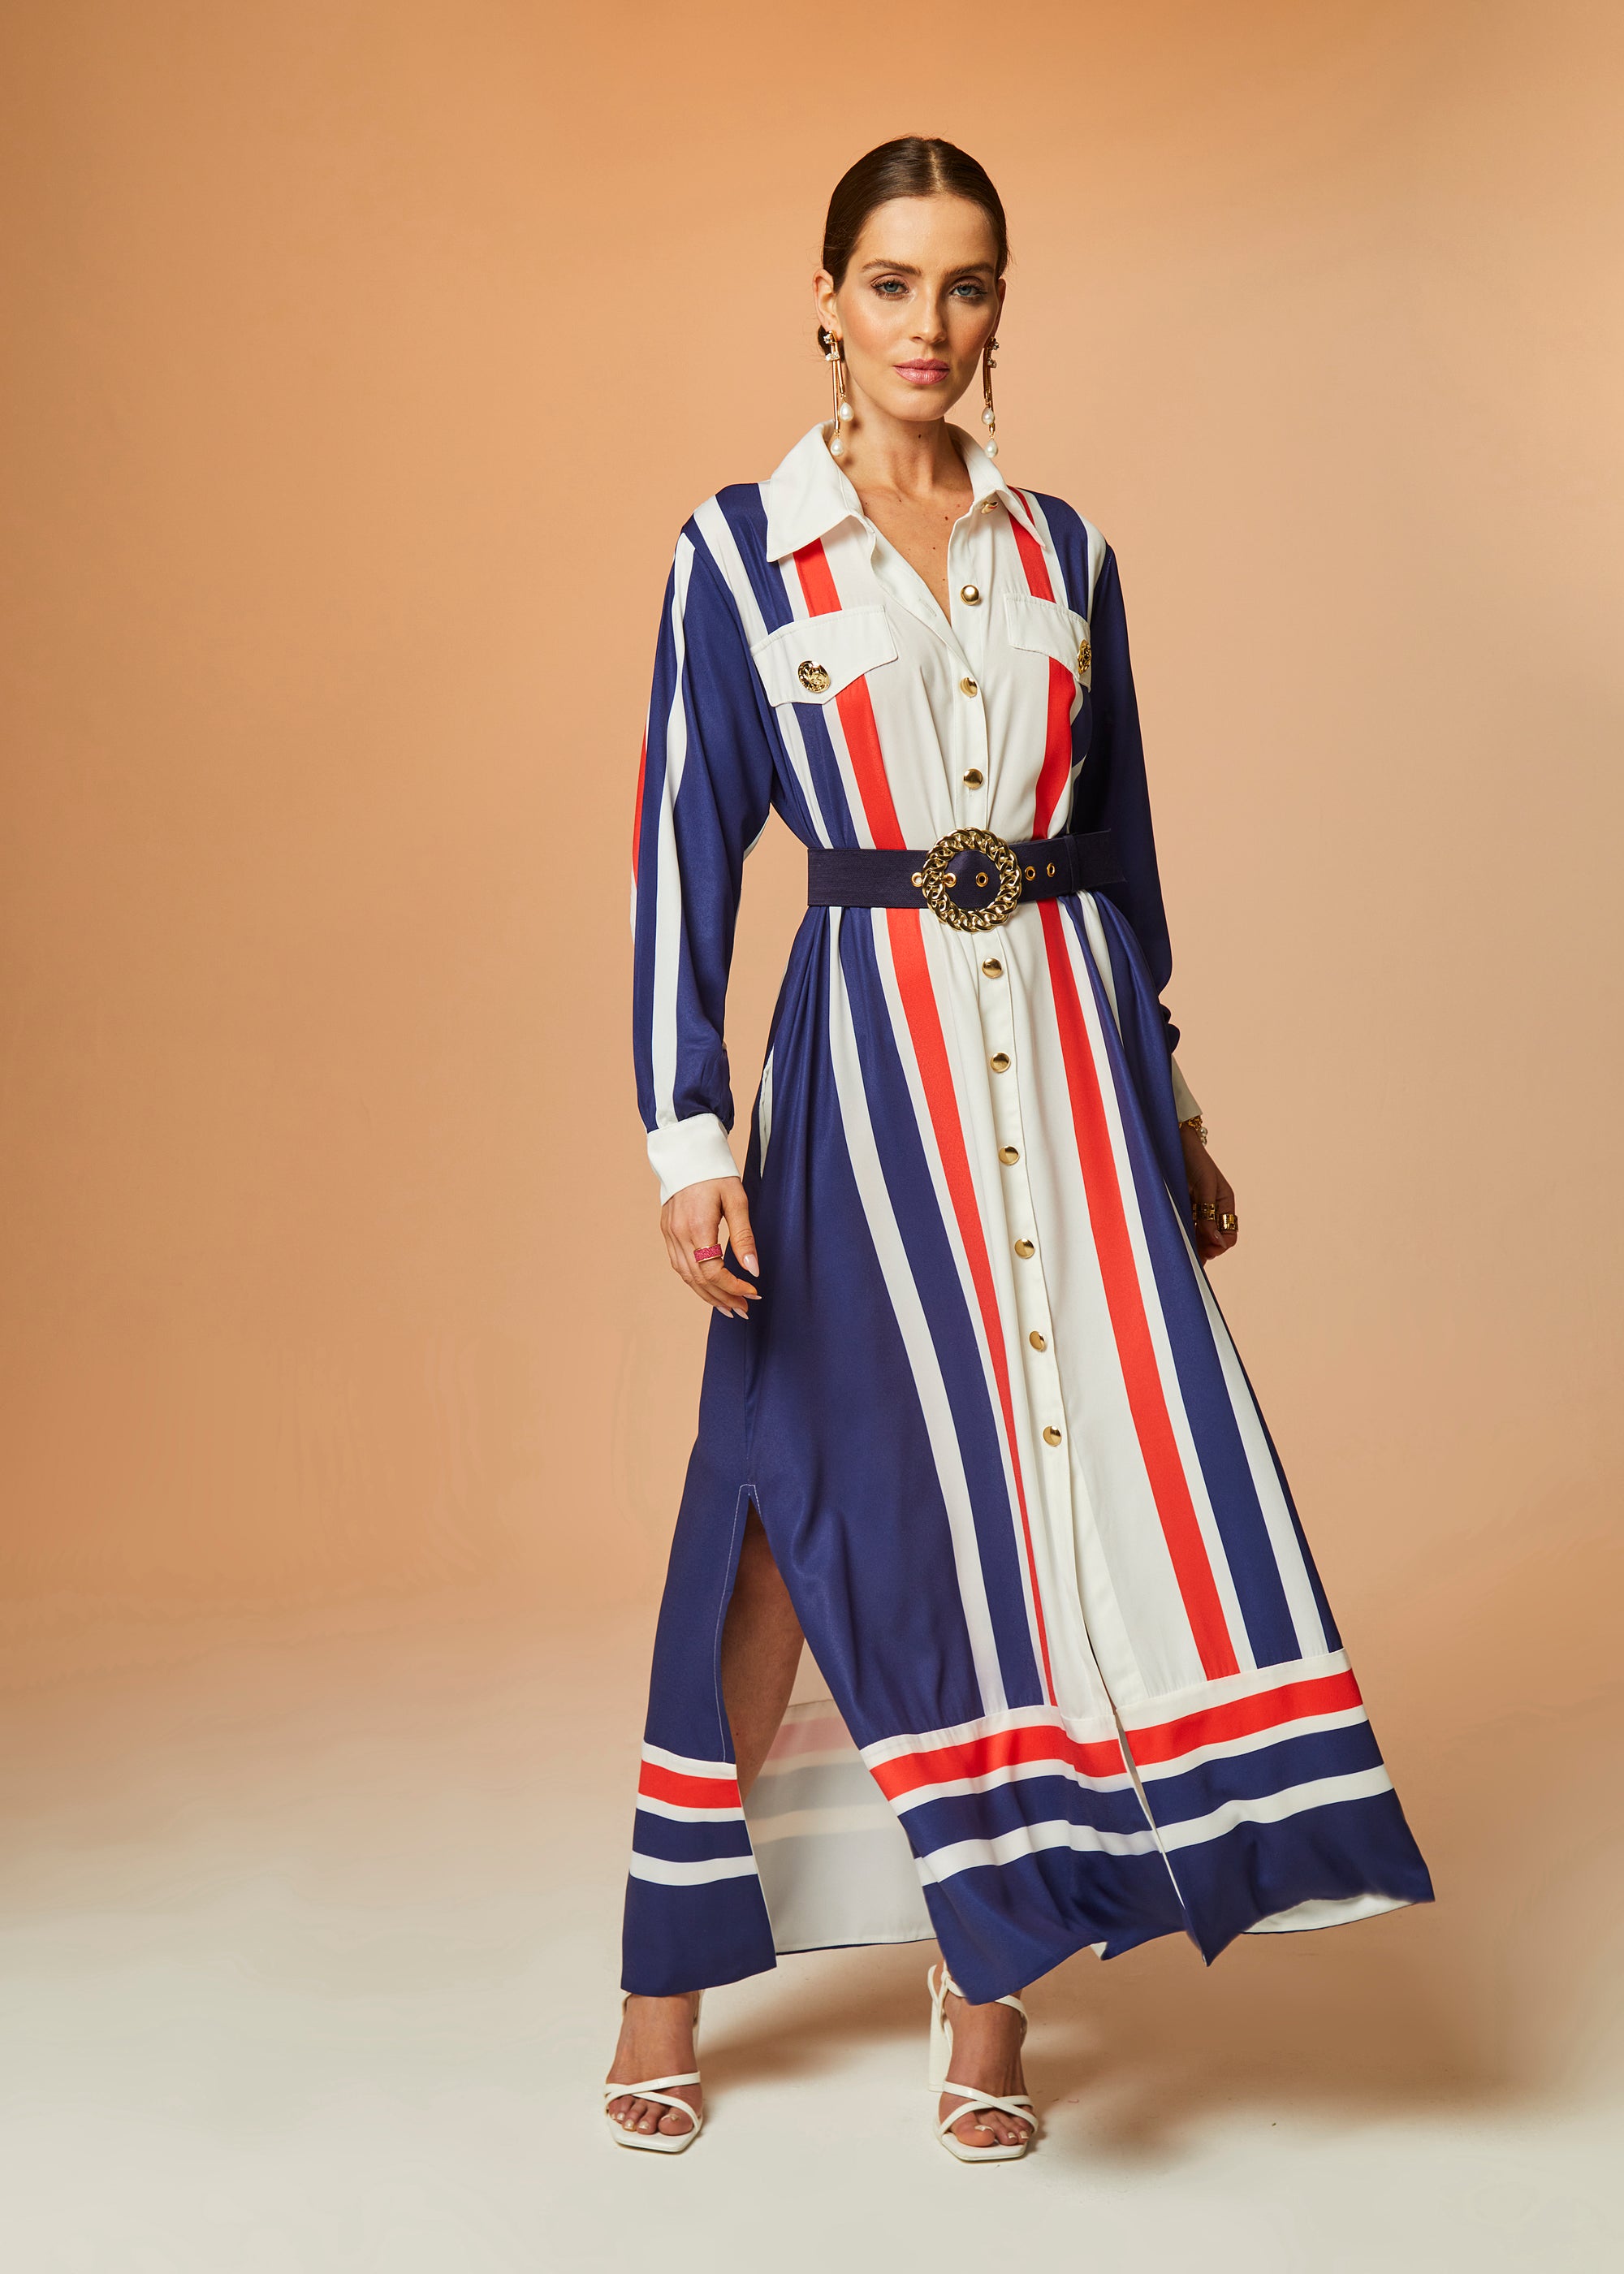 Zerlina Long Sleeve Maxi Dress - Navy